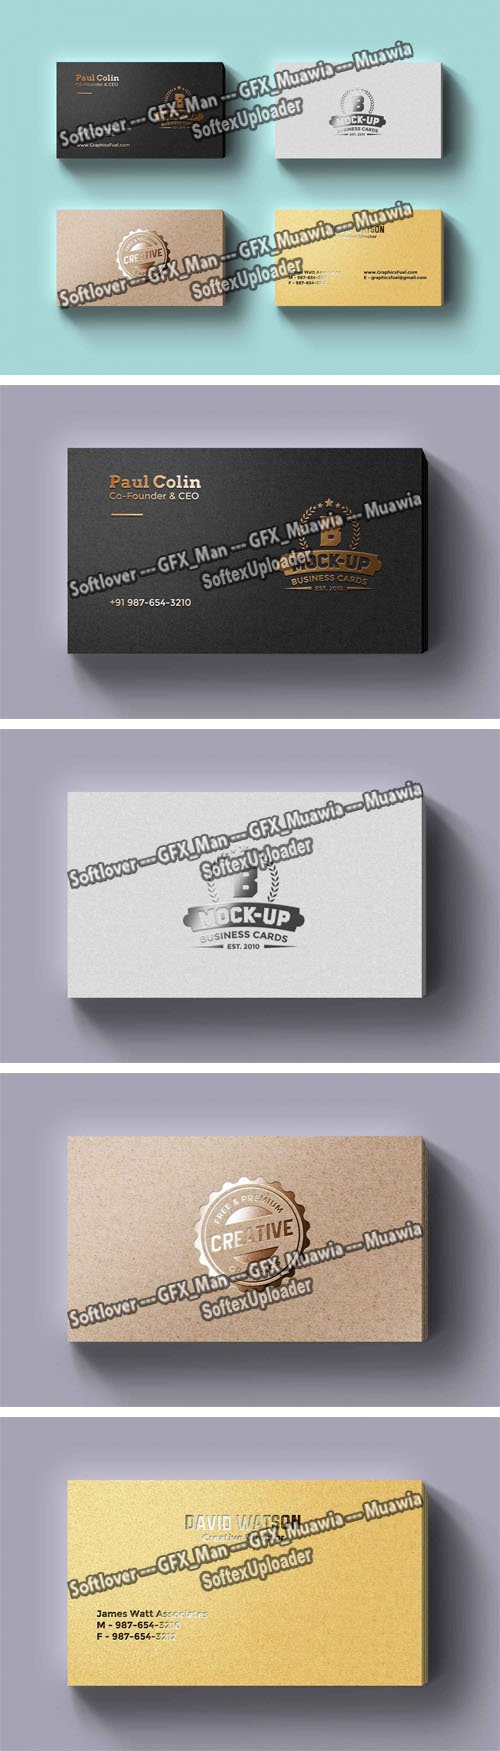 4 Multipurpose Business Cards PSD Mockups Templates